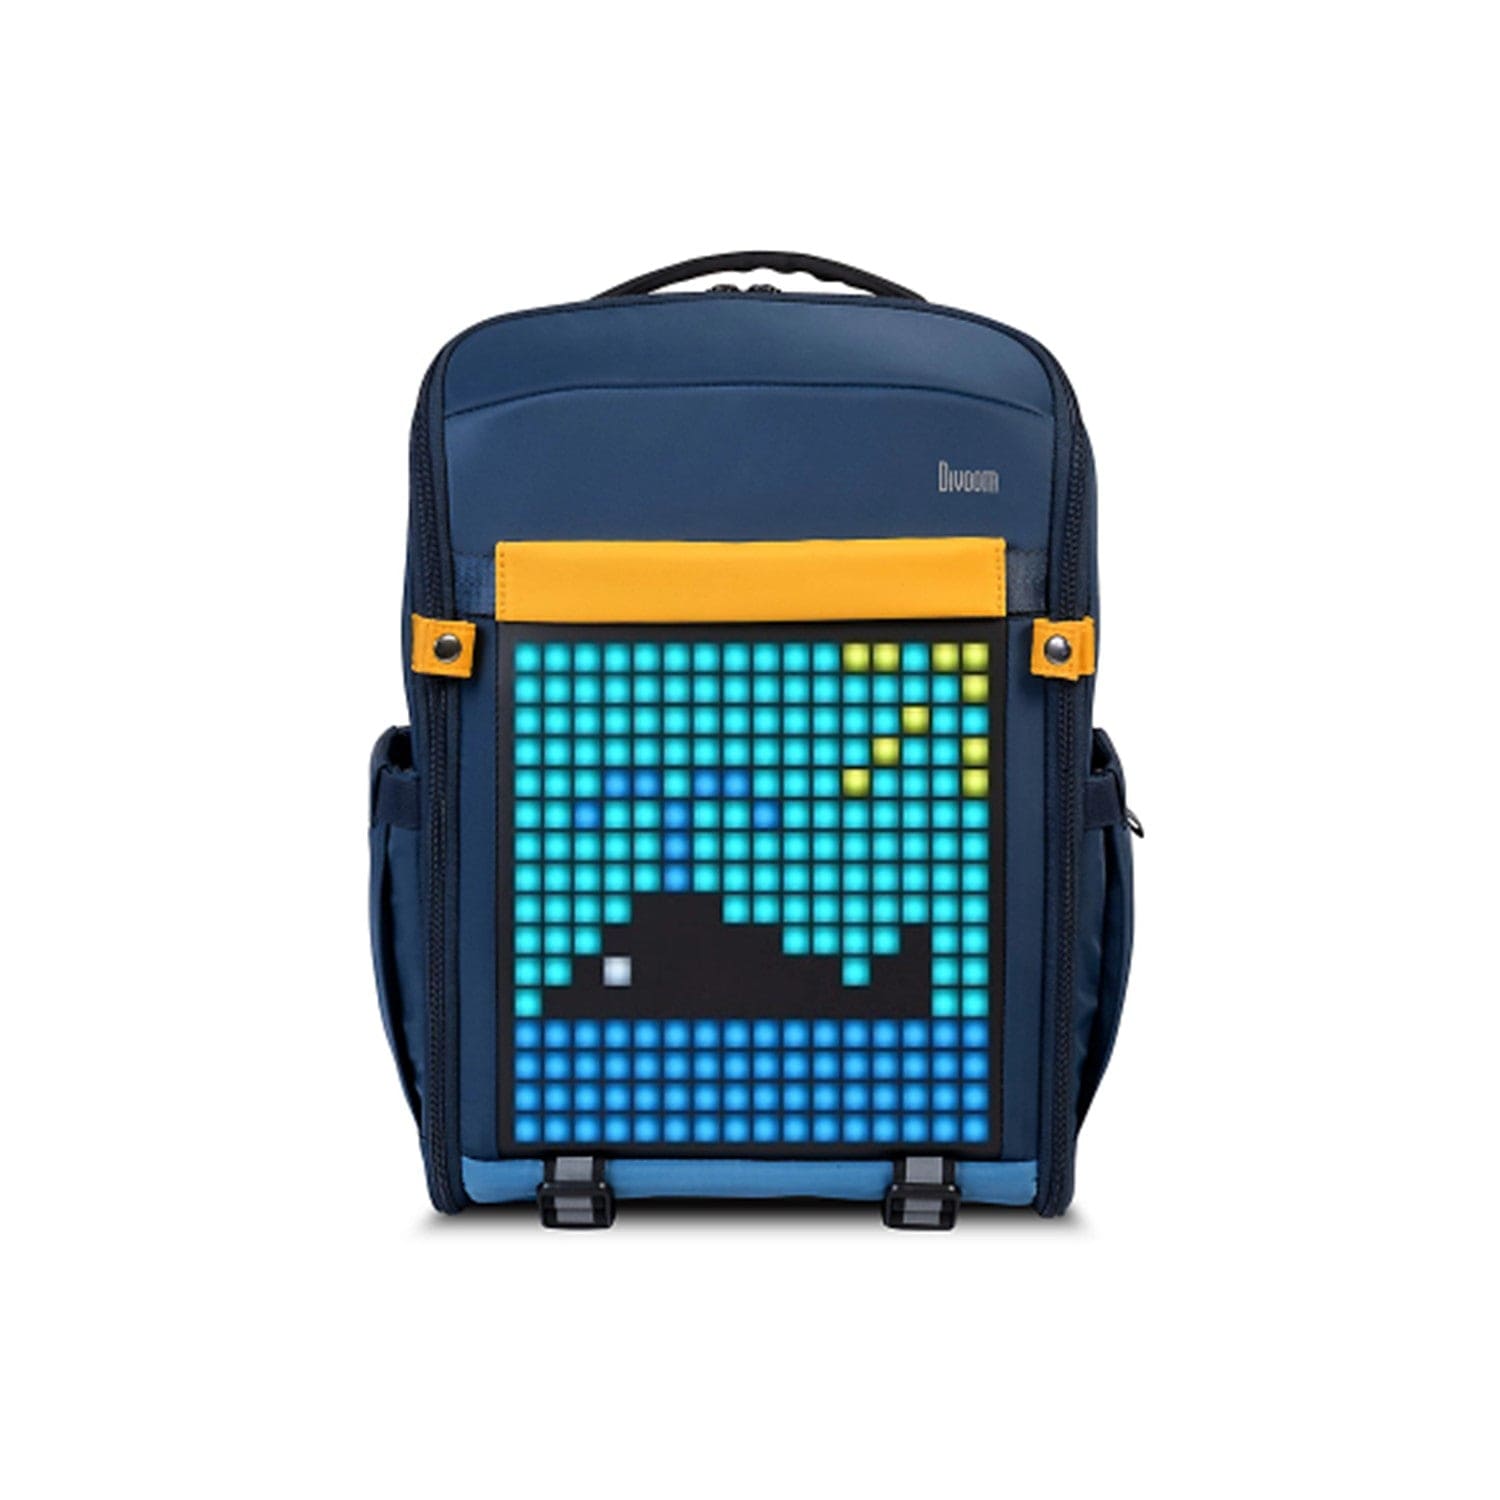 Divoom BackPack - S with Pixel Art Display